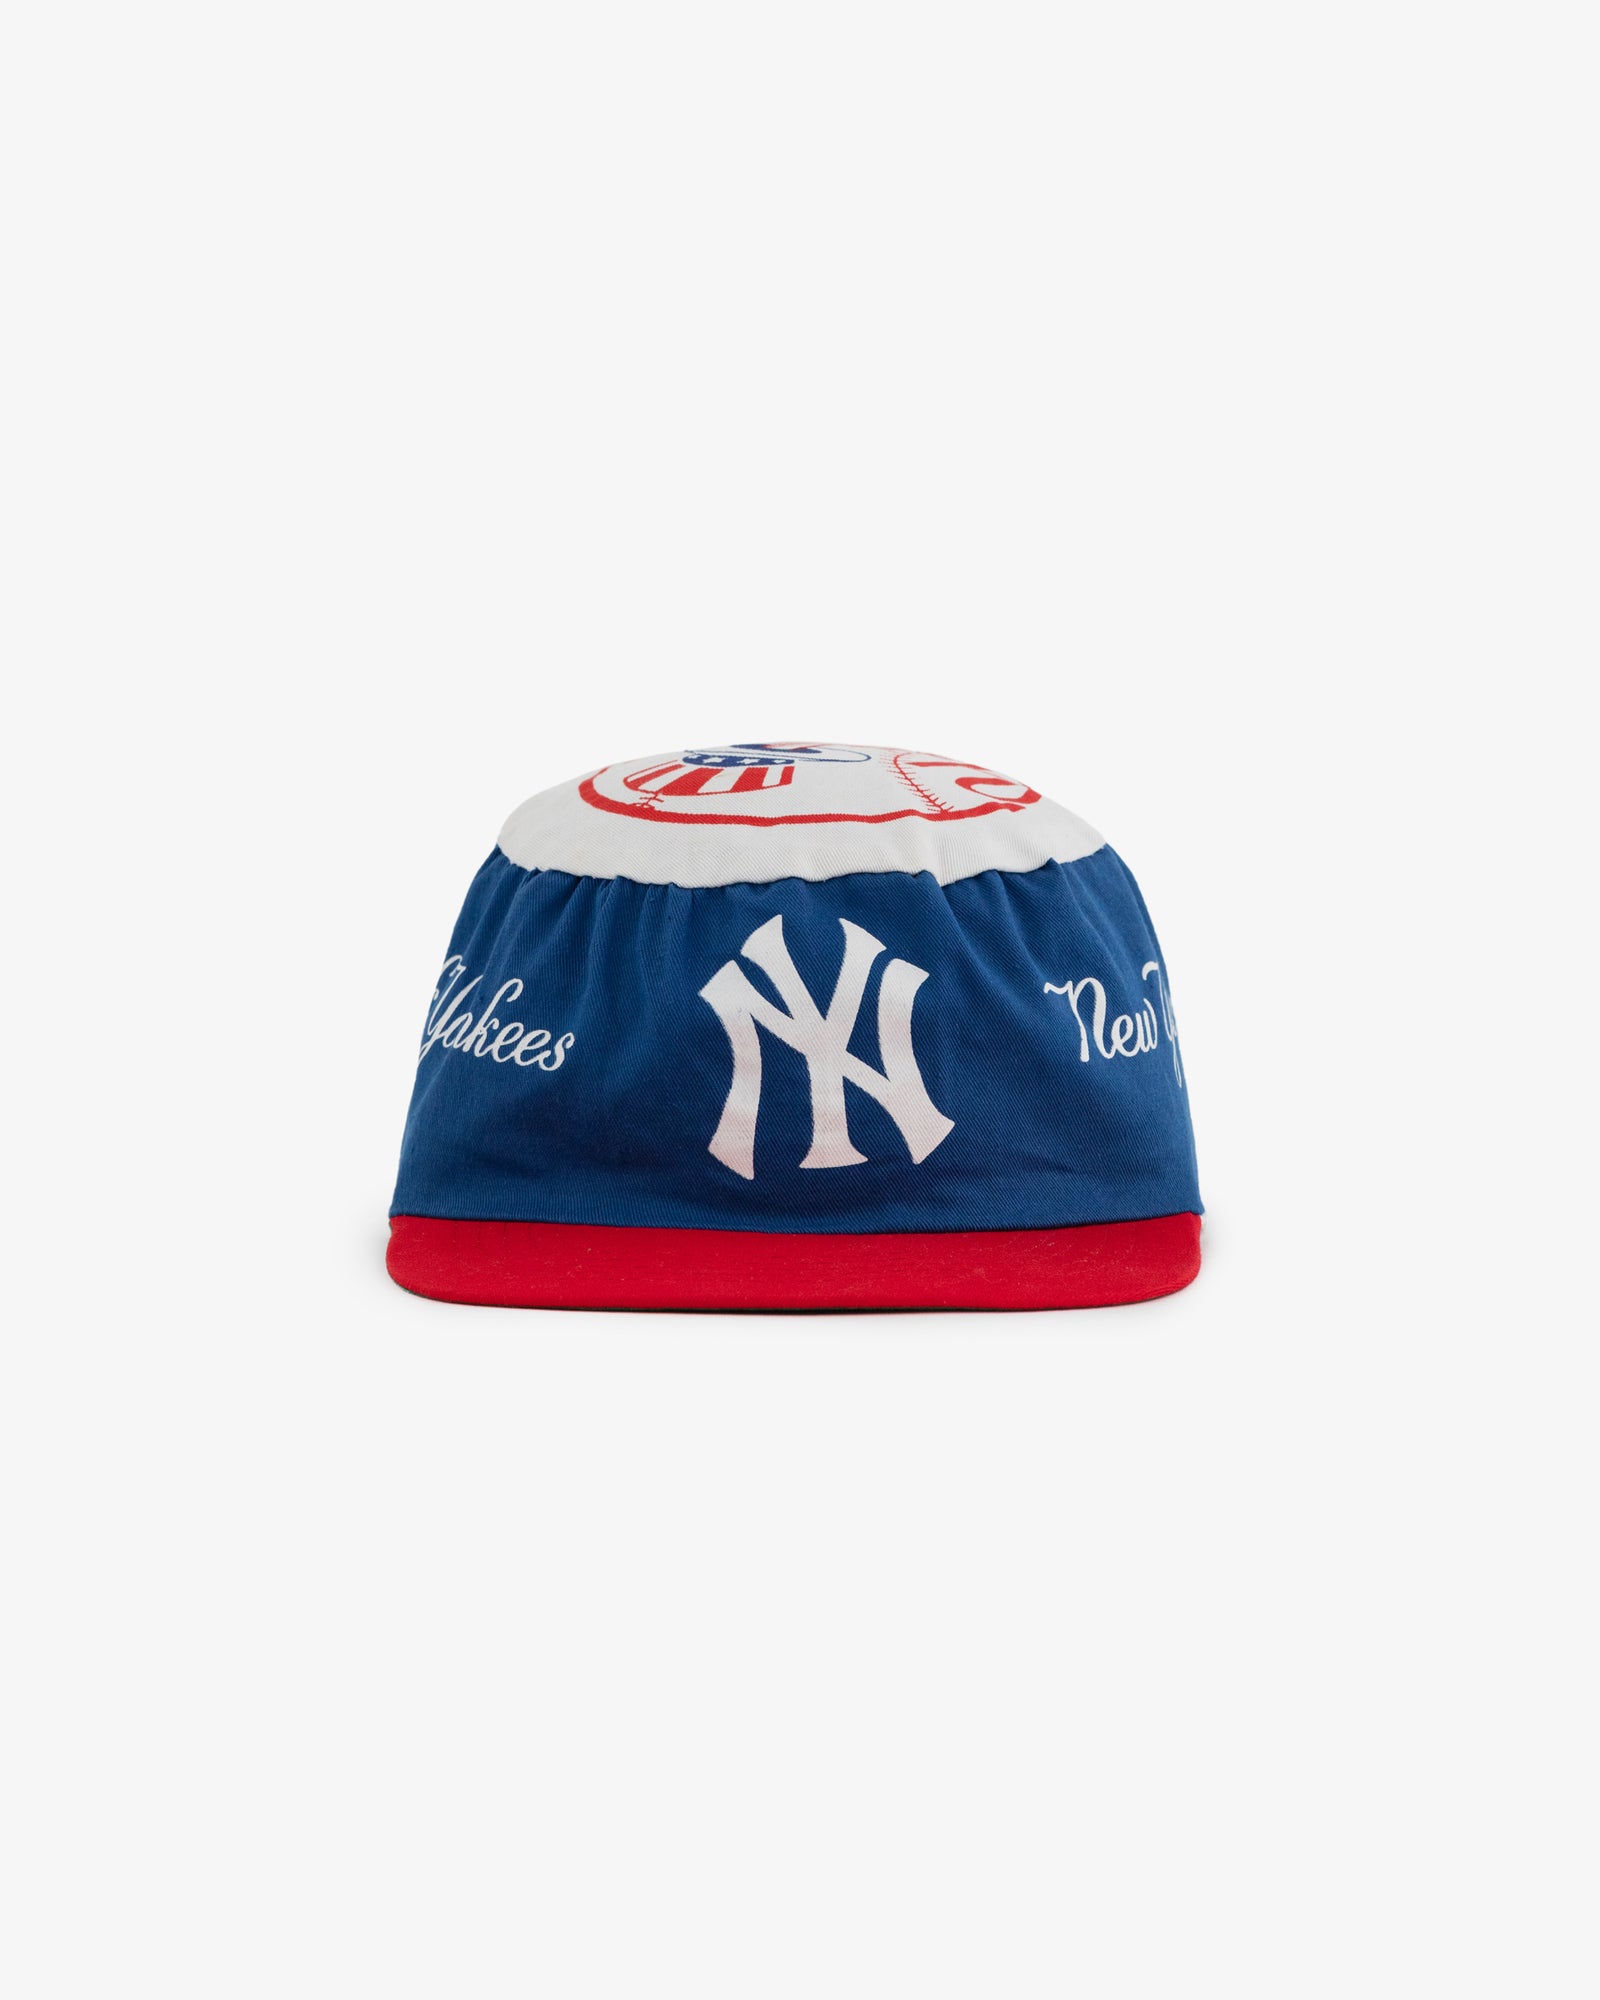 Vintage New York Yankees Painter's Hat